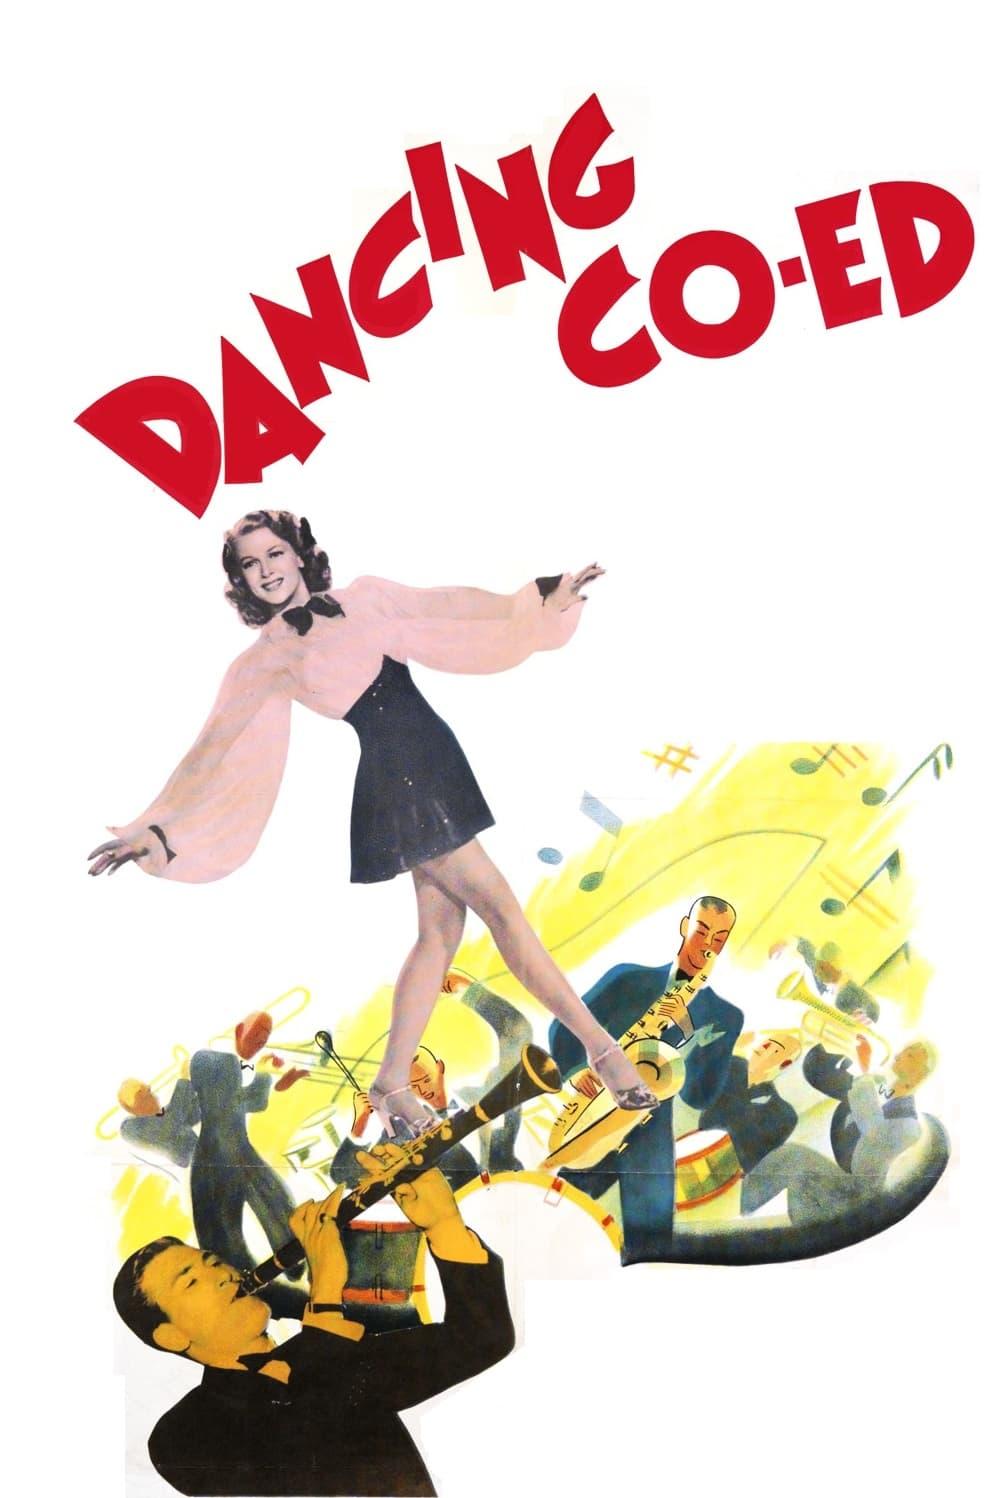 Dancing Co-Ed poster